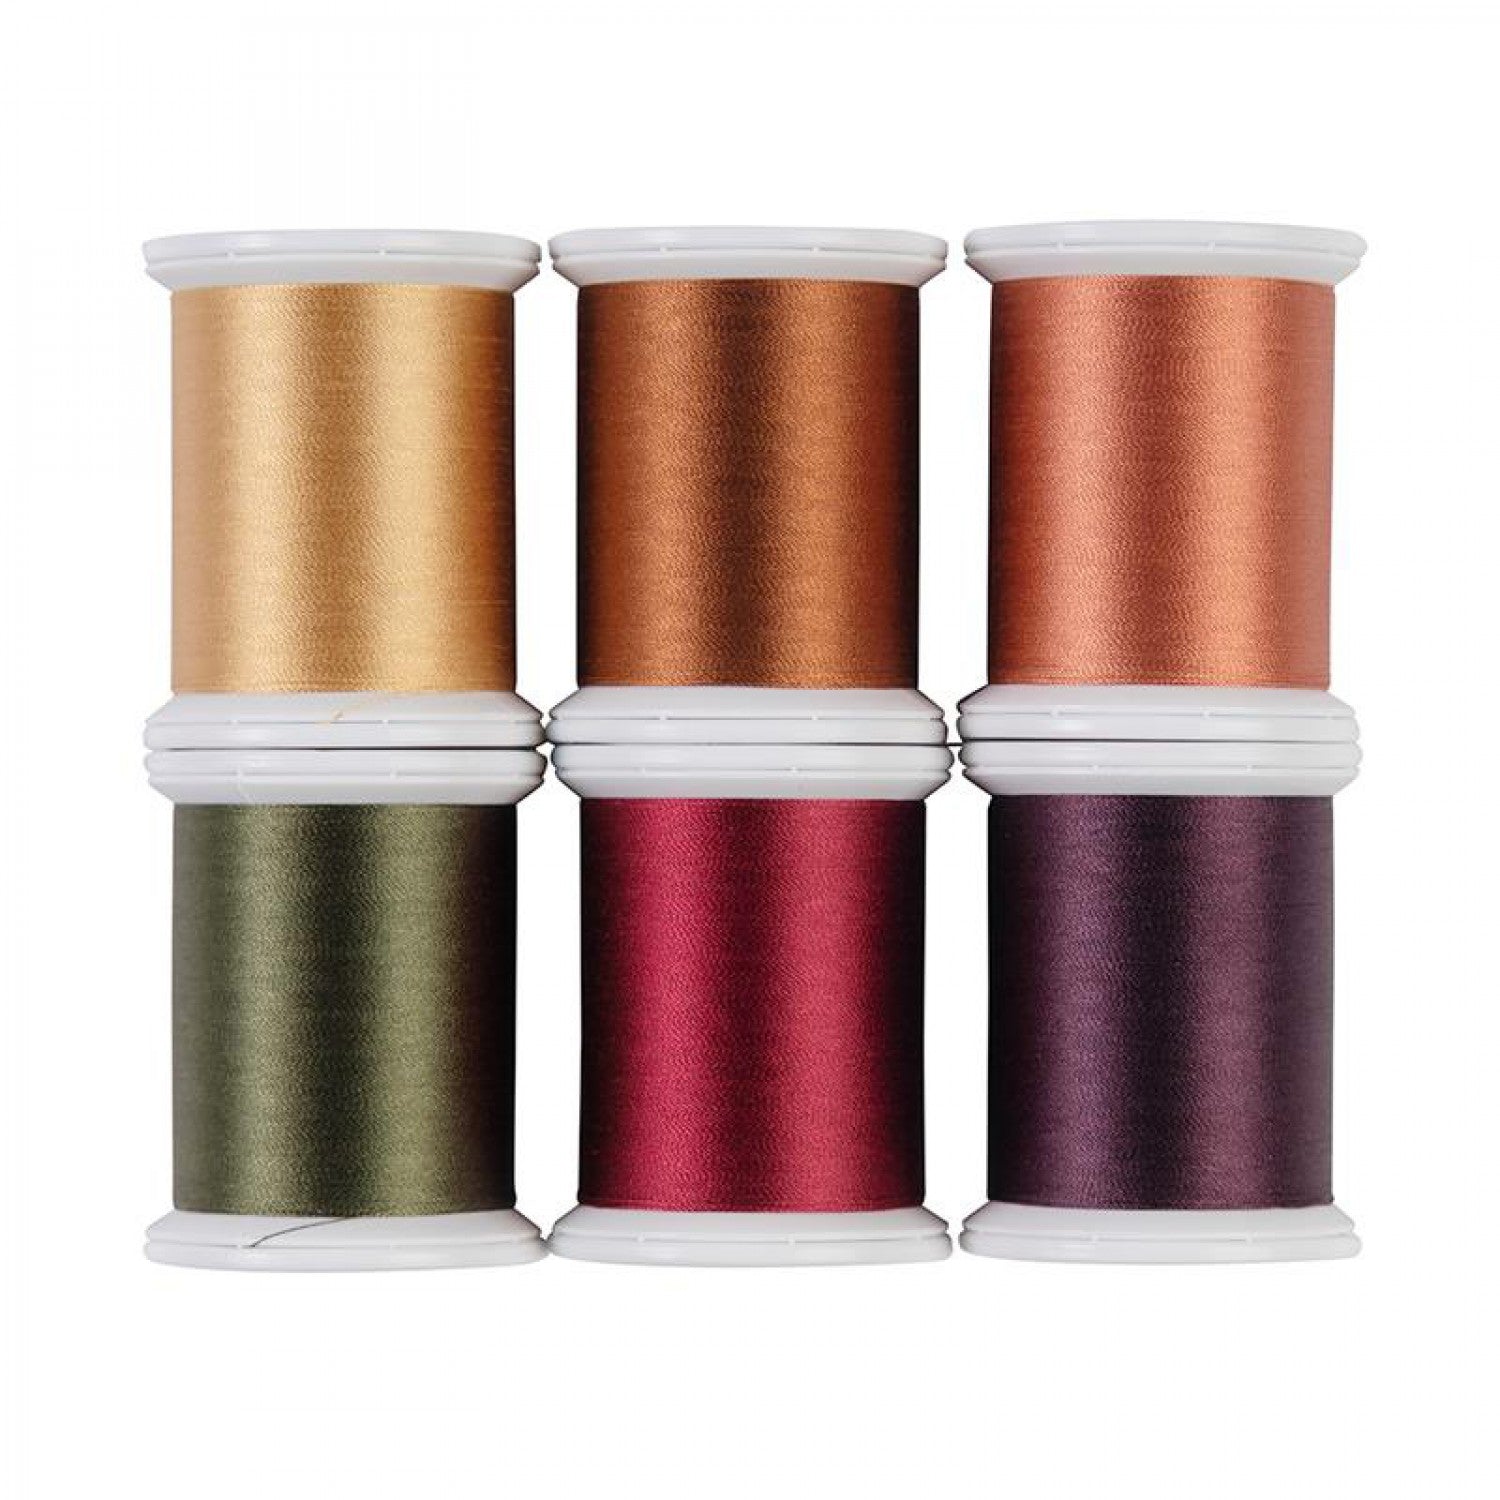 Kimono Silk 6-Spool Thread Set Fall Collection by Superior Threads